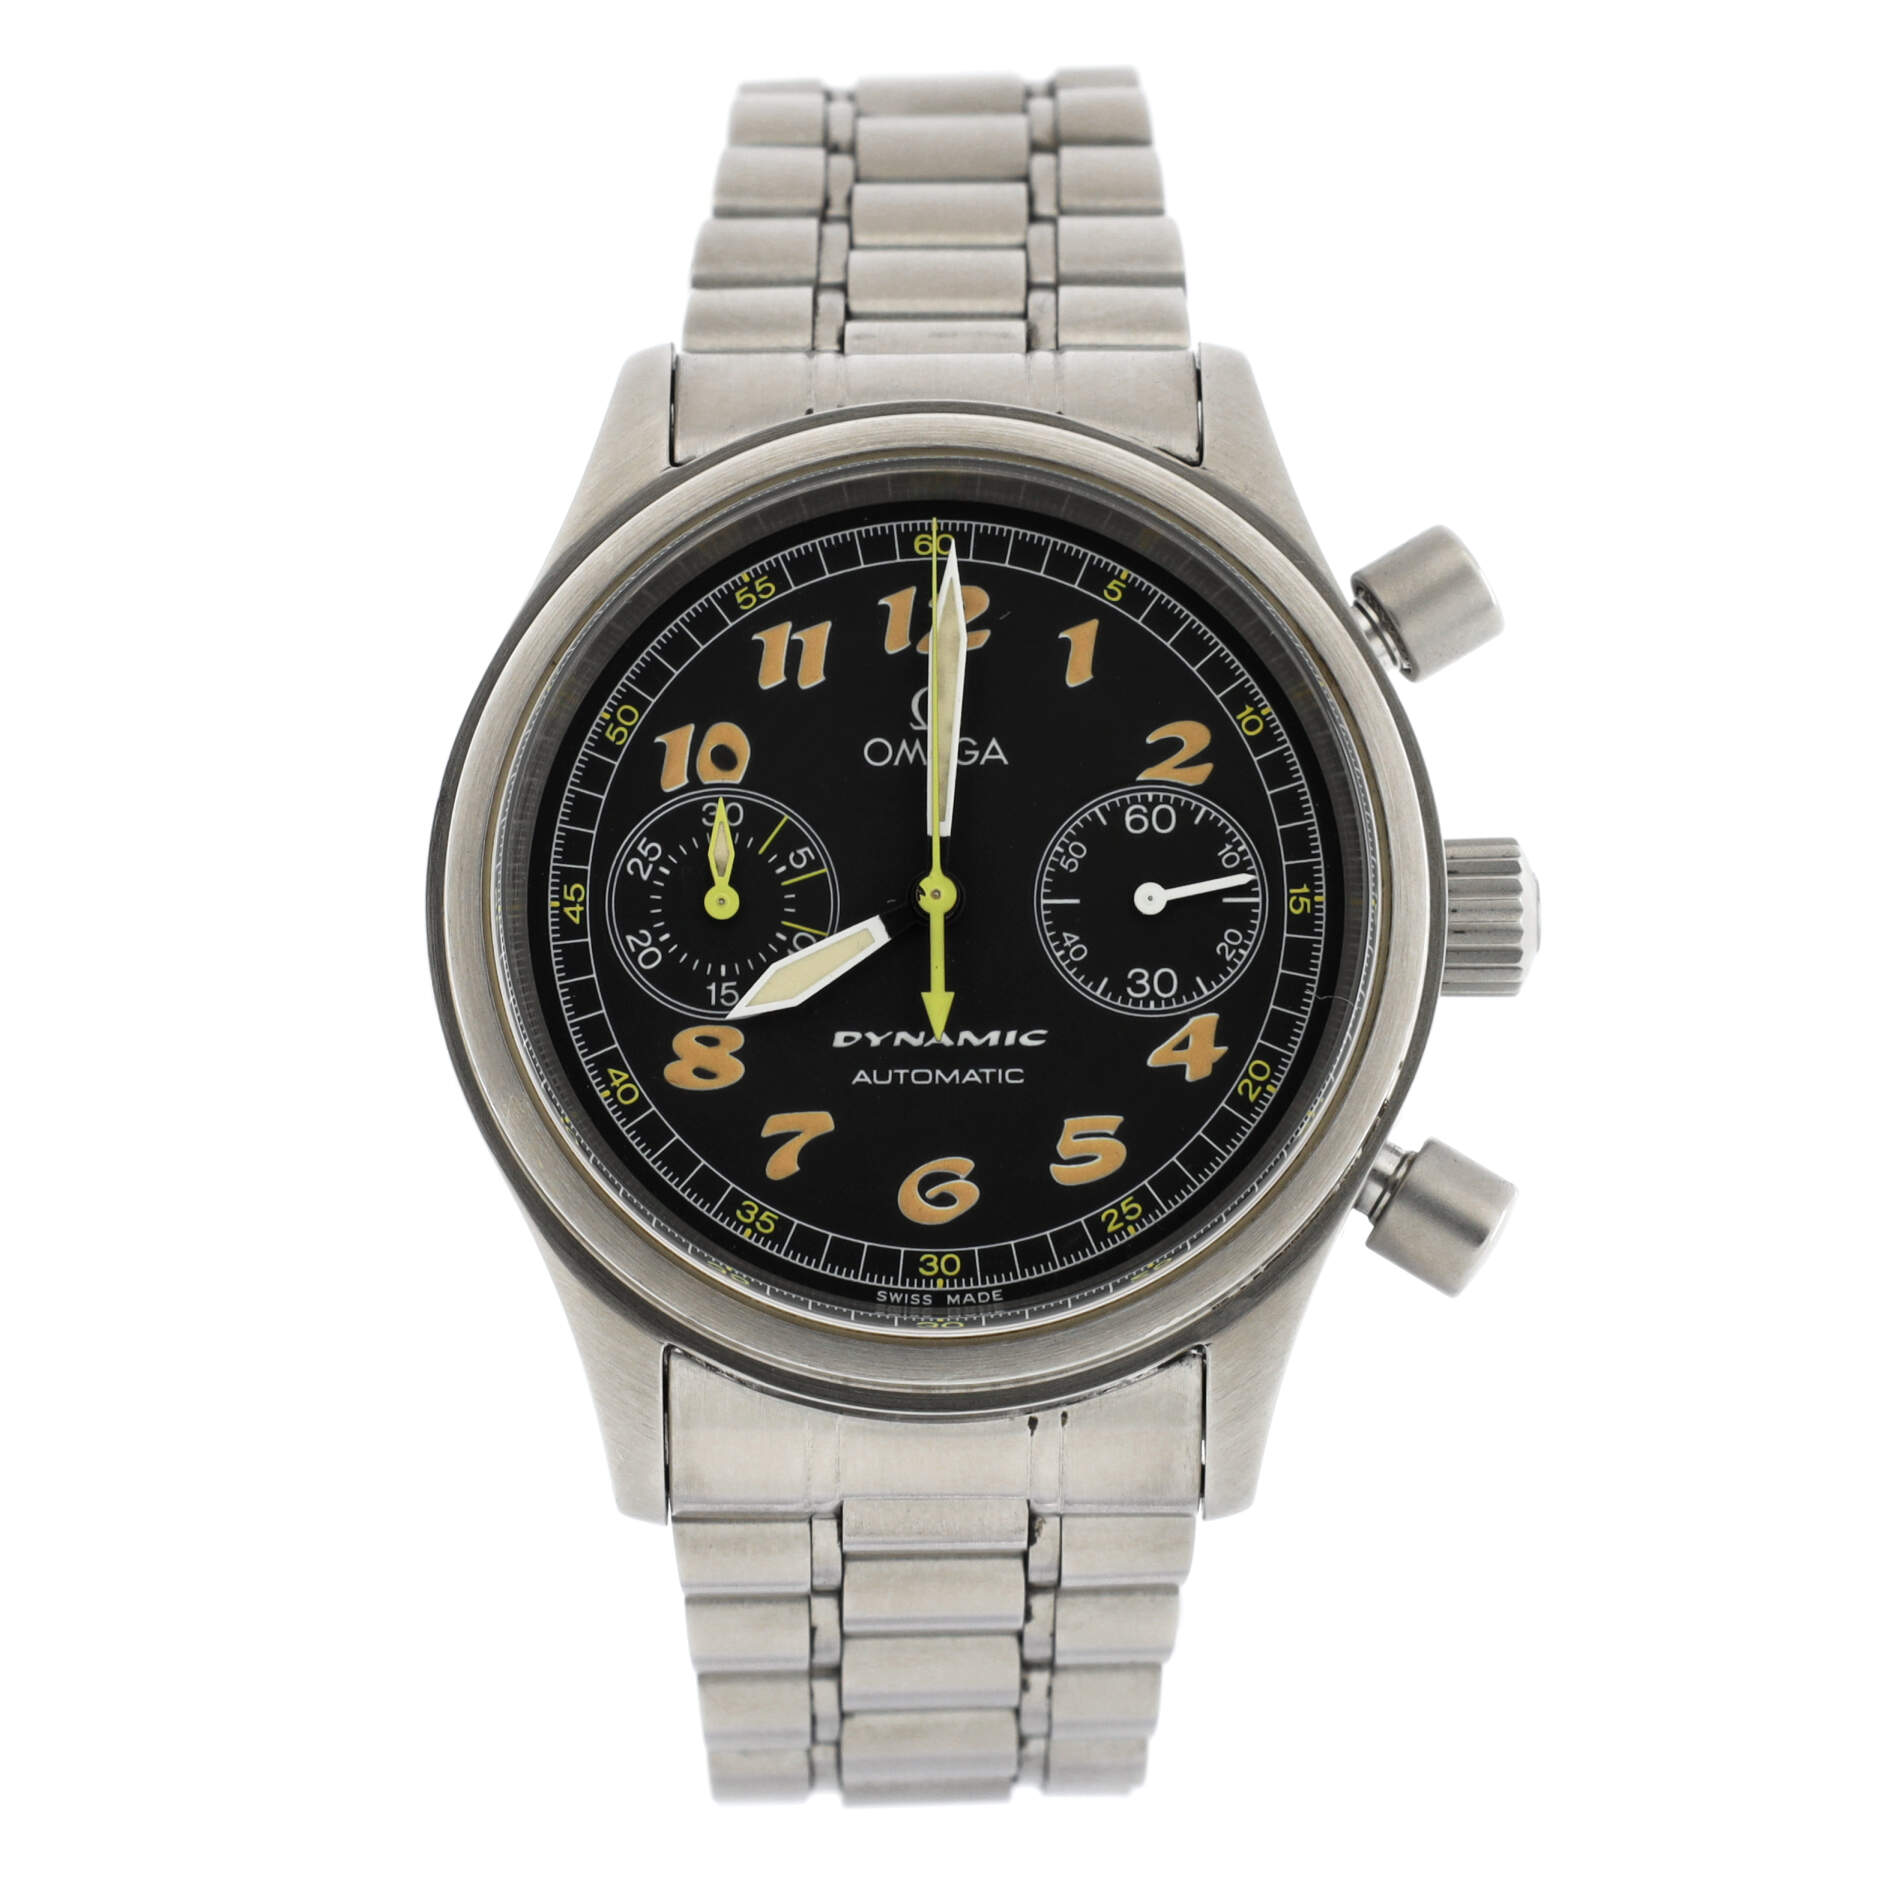 Dynamic III Chronograph Automatic Watch (5240.50.00)